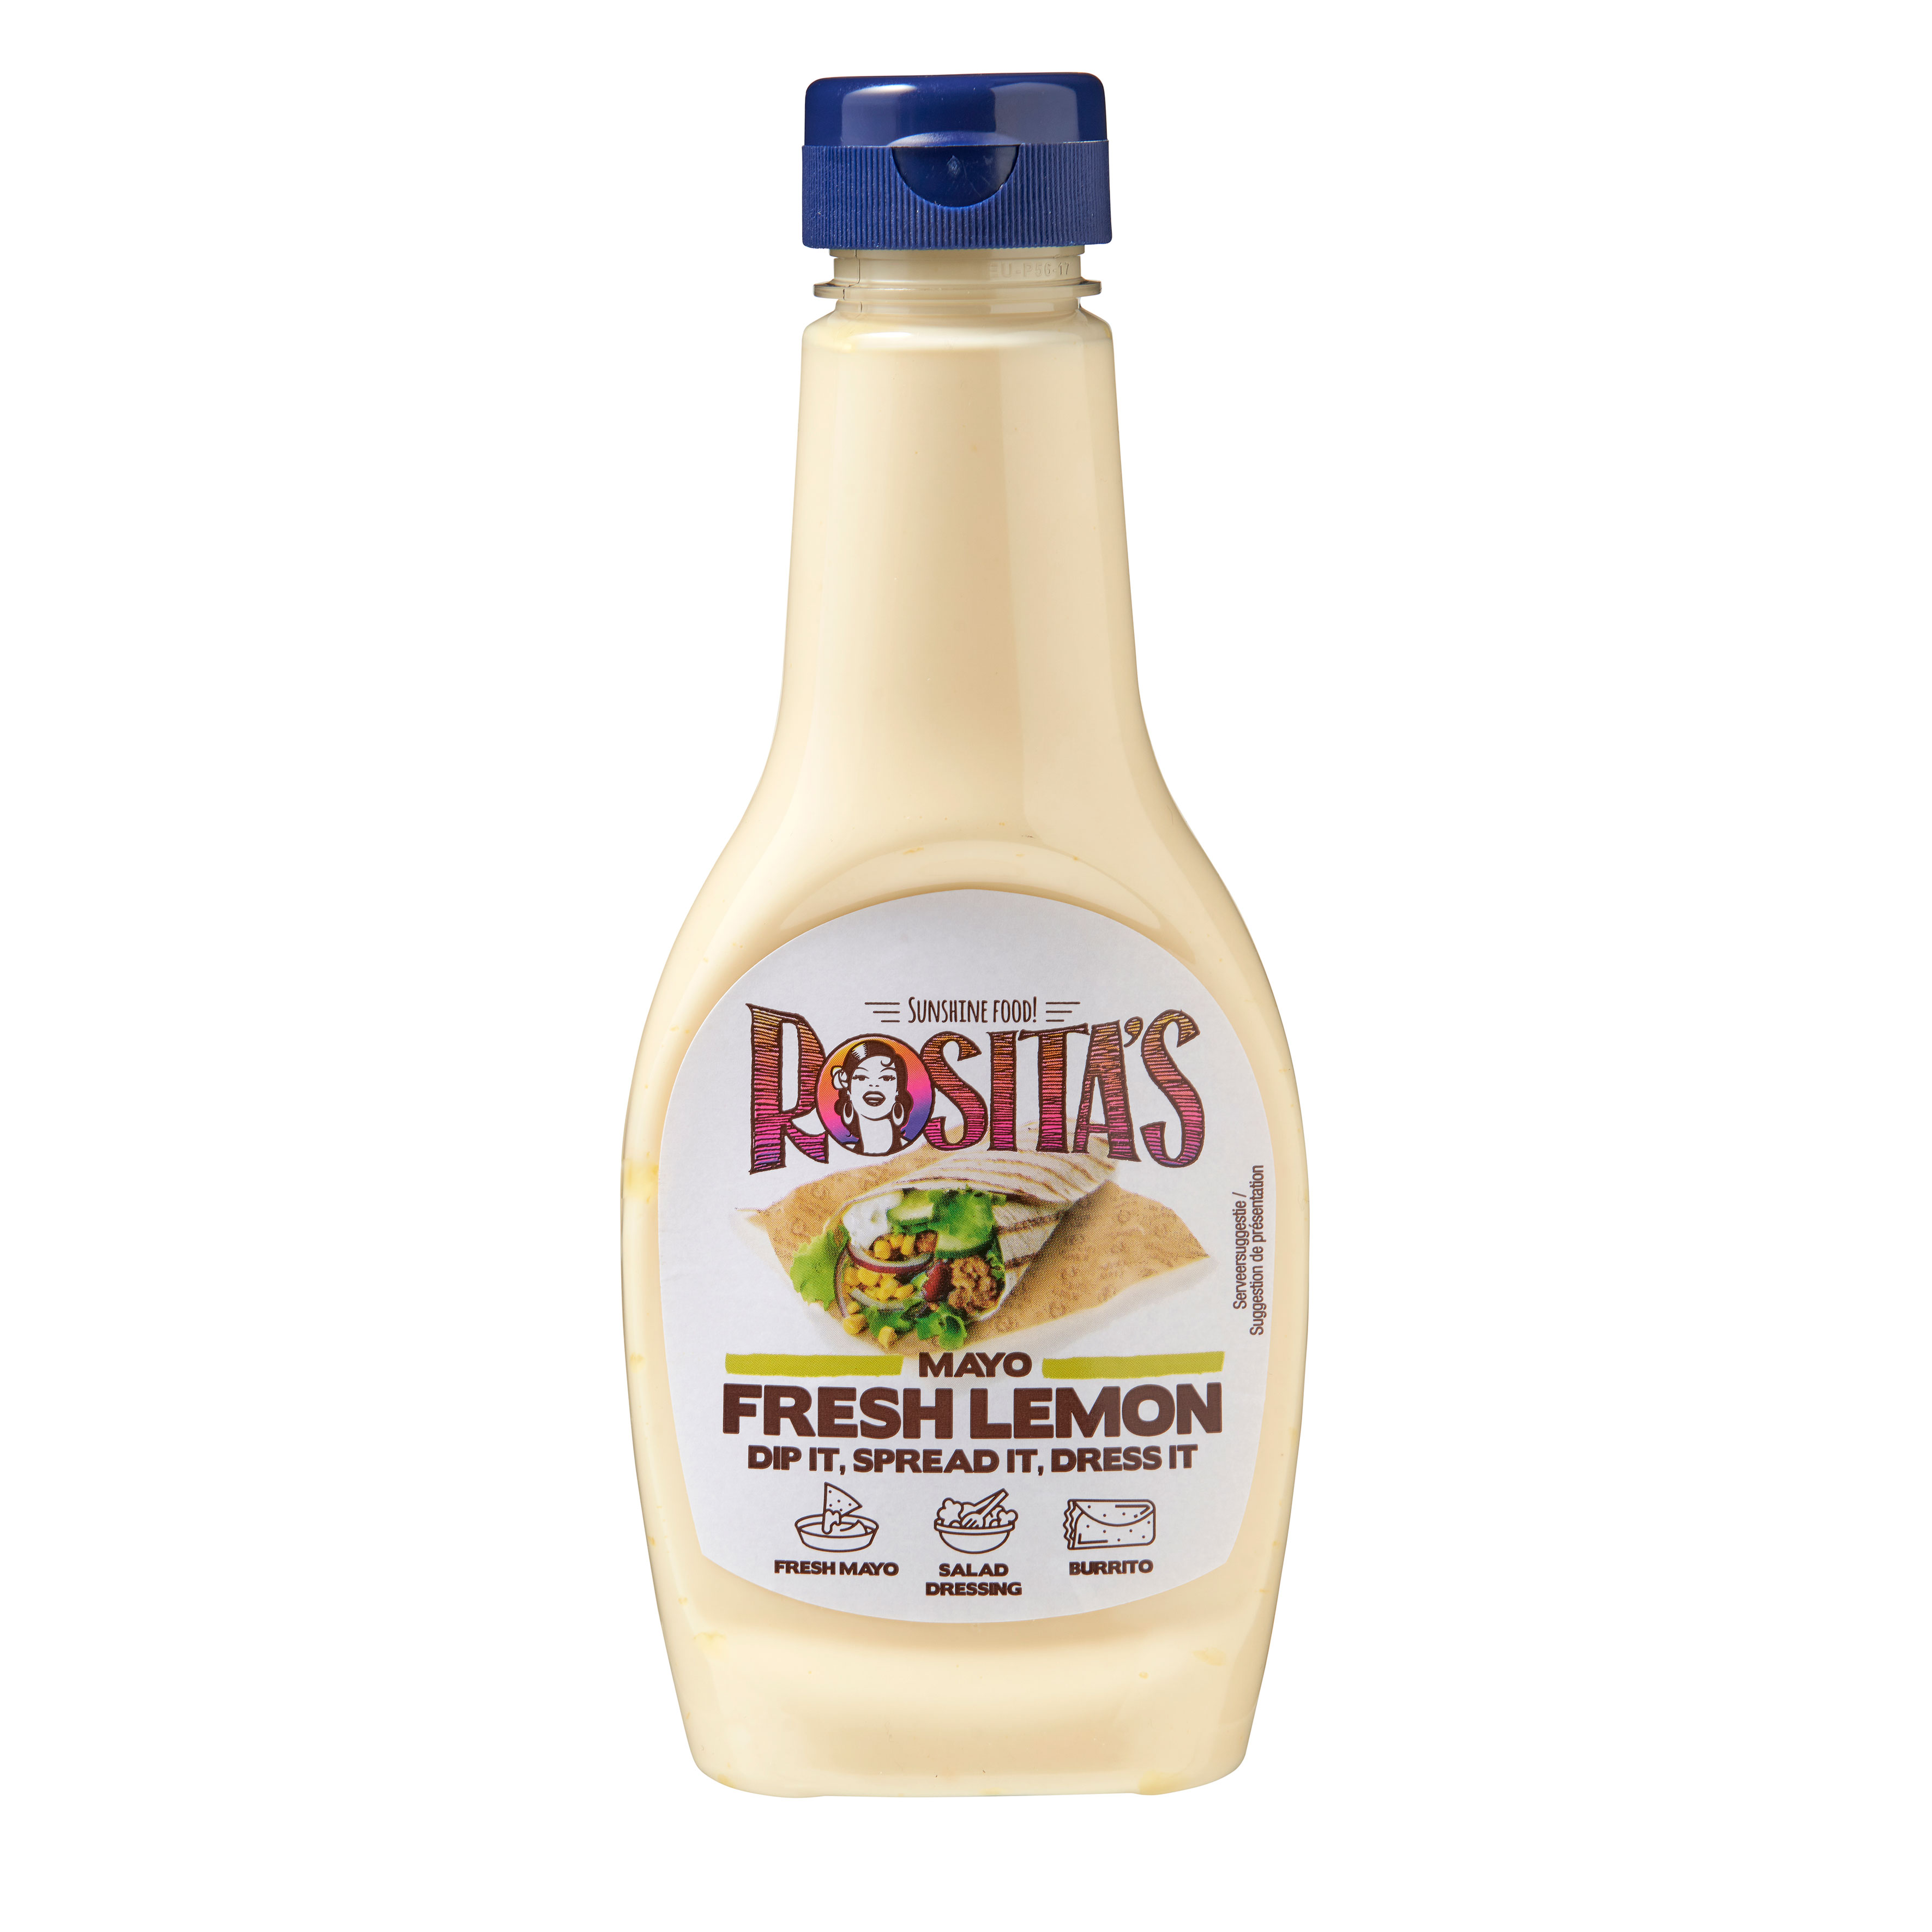 Rositas-Mayo-Fresh-Lemon-web.jpg